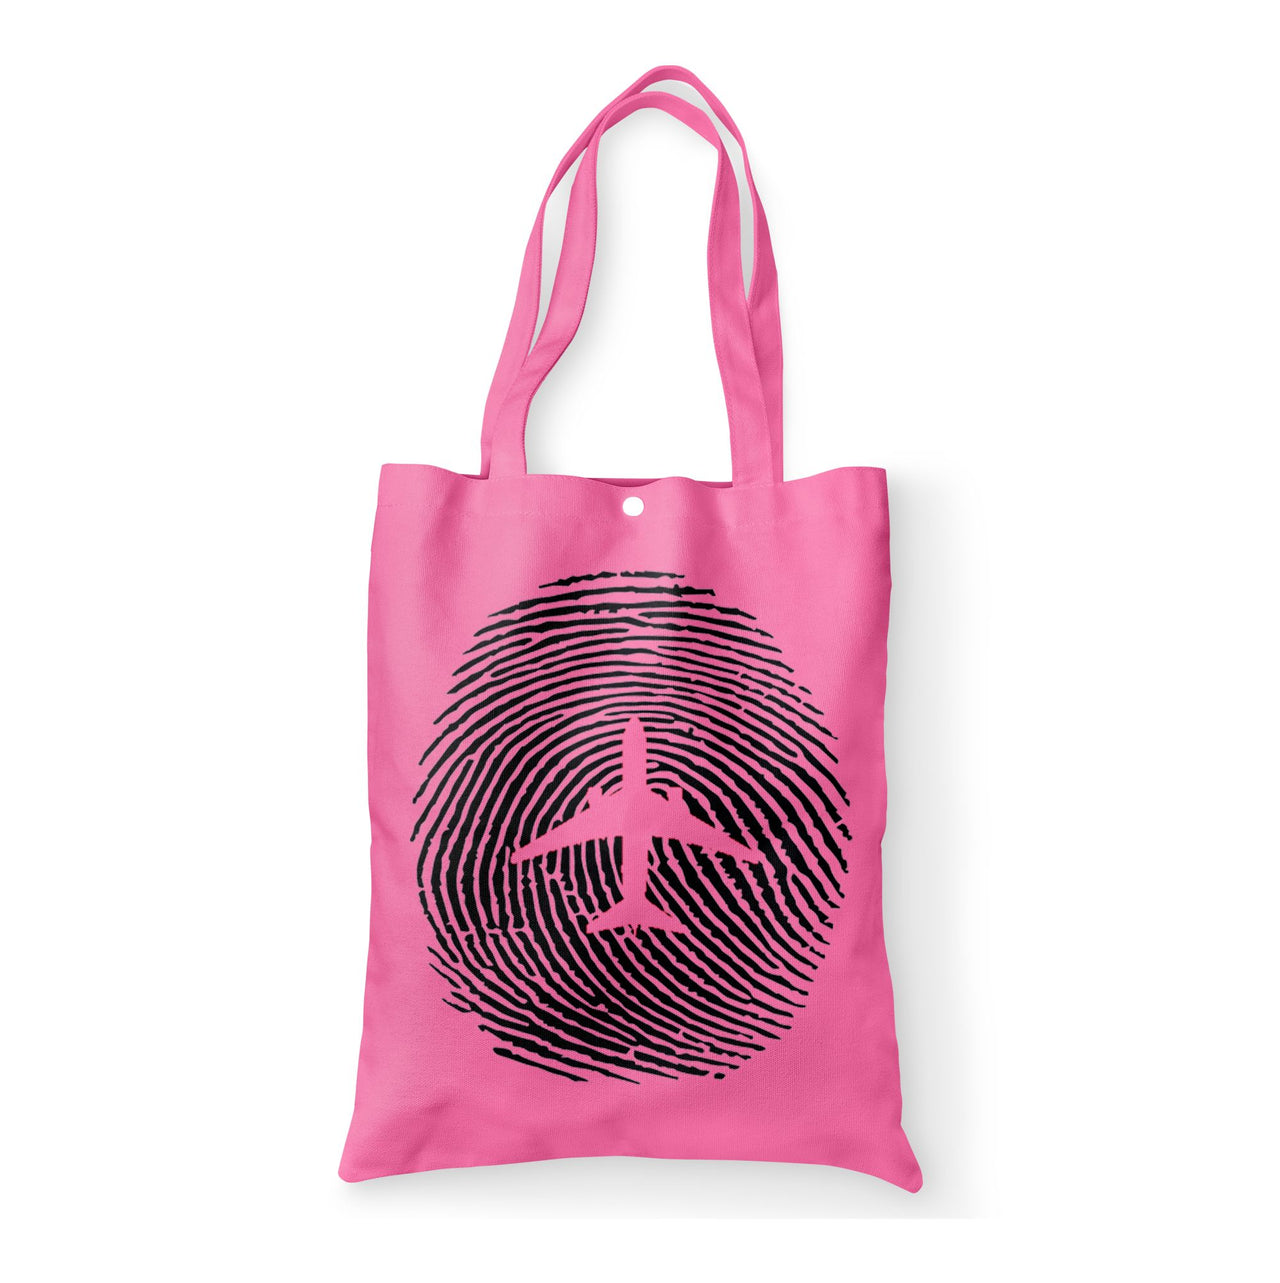 Aviation Finger Print Designed Tote Bags